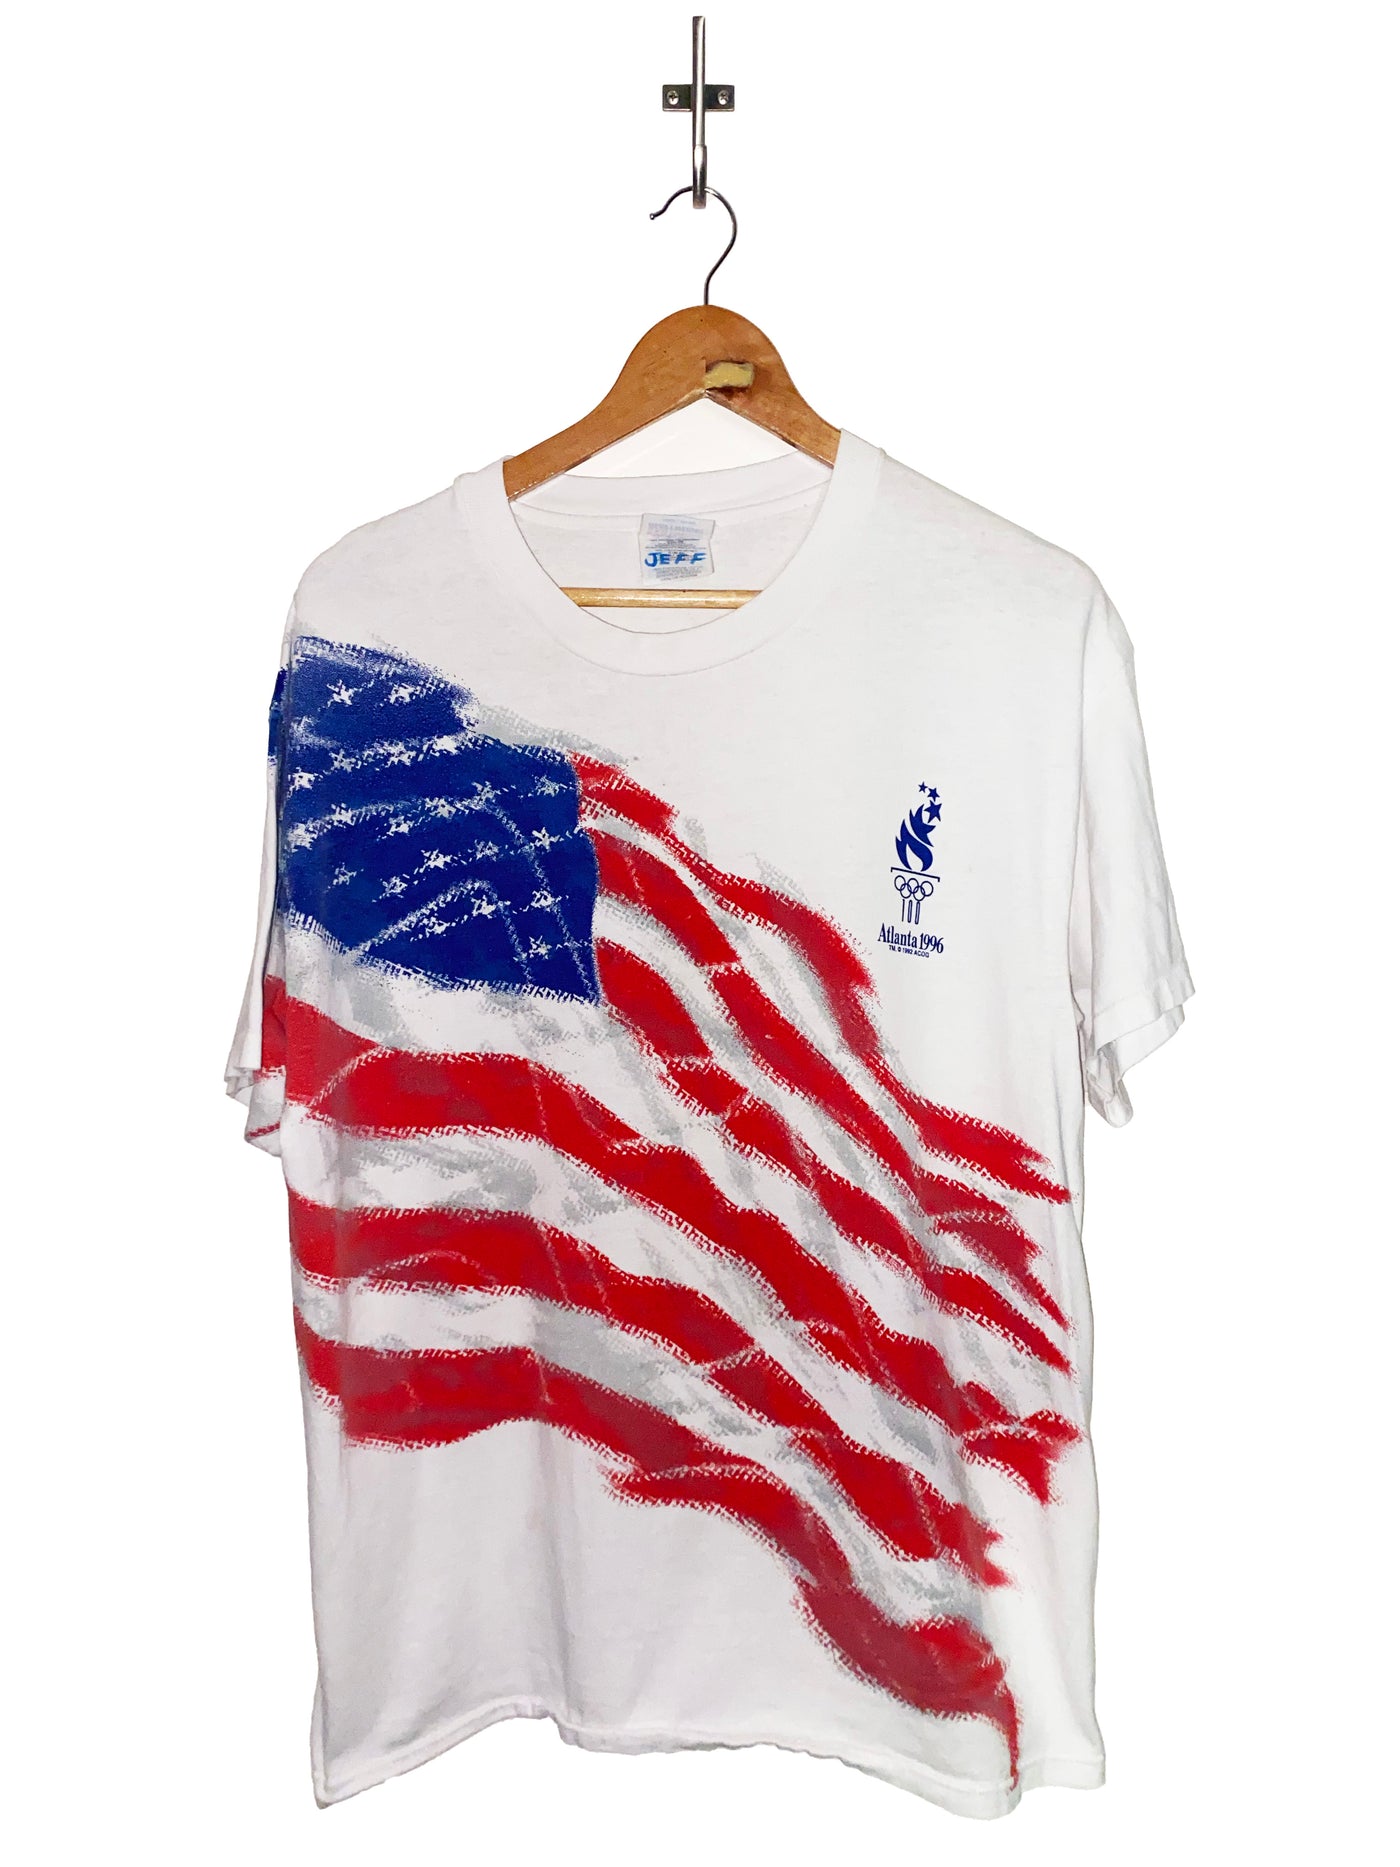 Vintage 1996 Atlanta Olympics USA T-Shirt